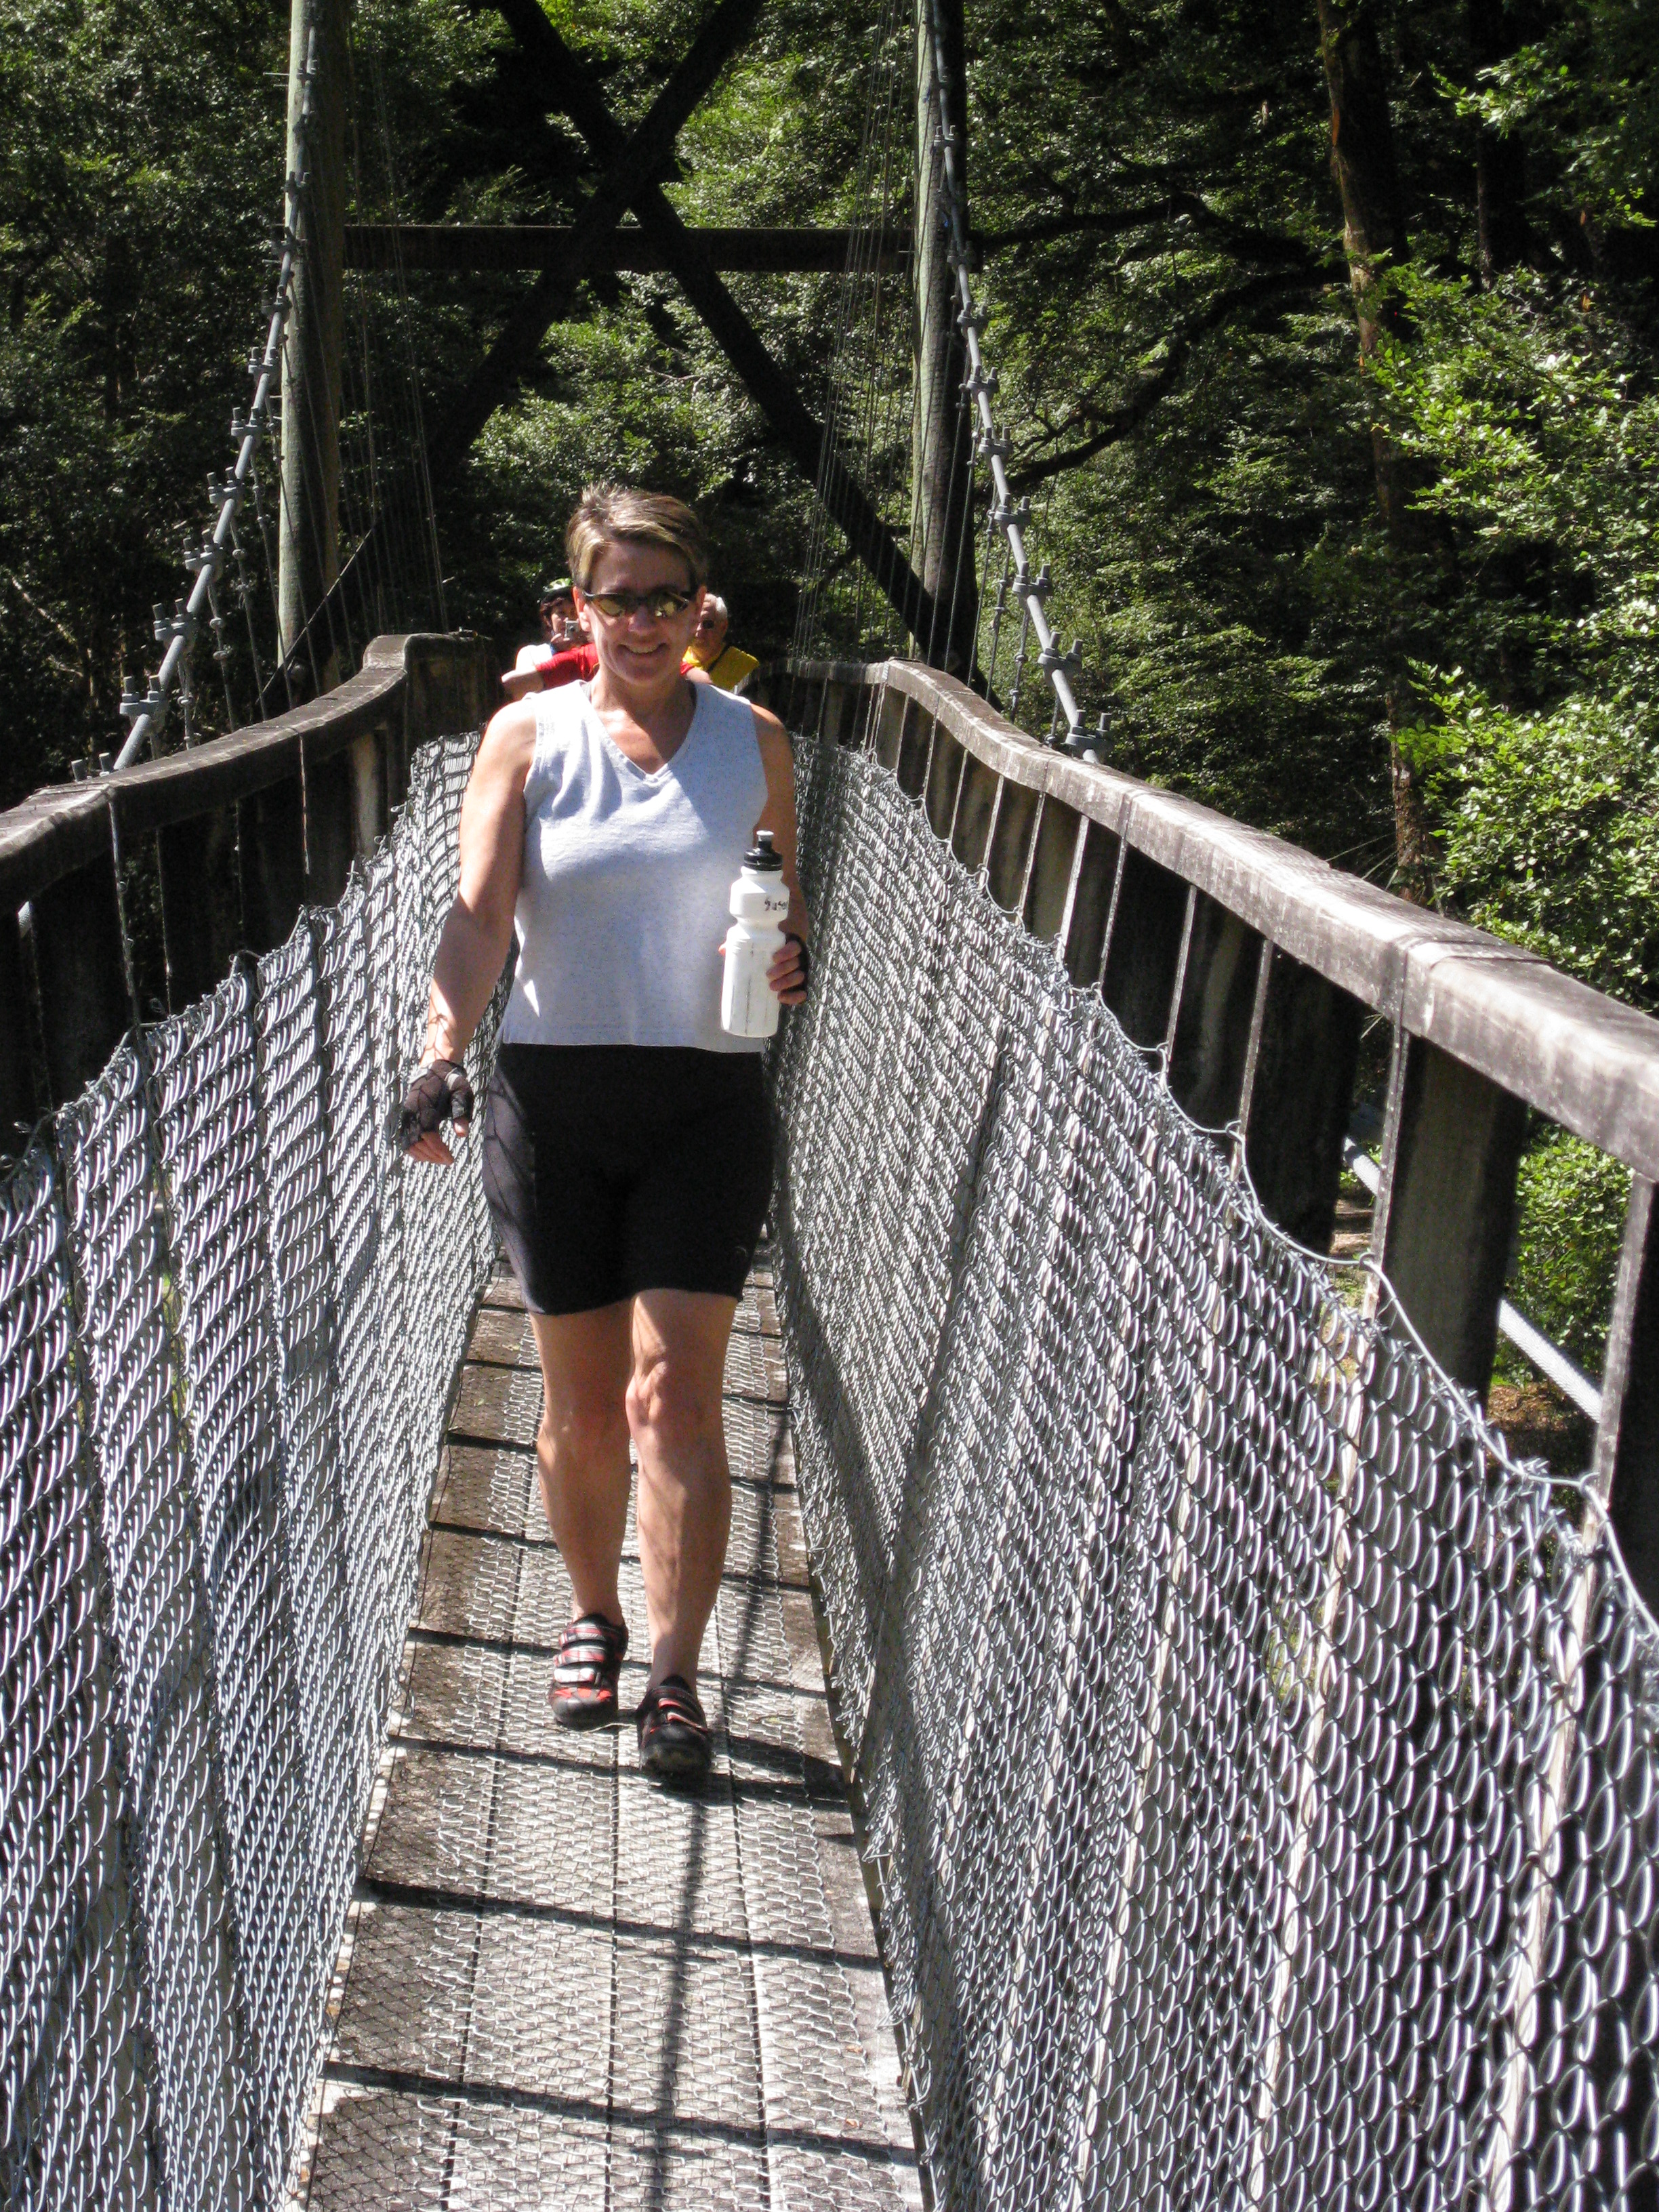 A swing bridge - a common way to walk across NZs rivers